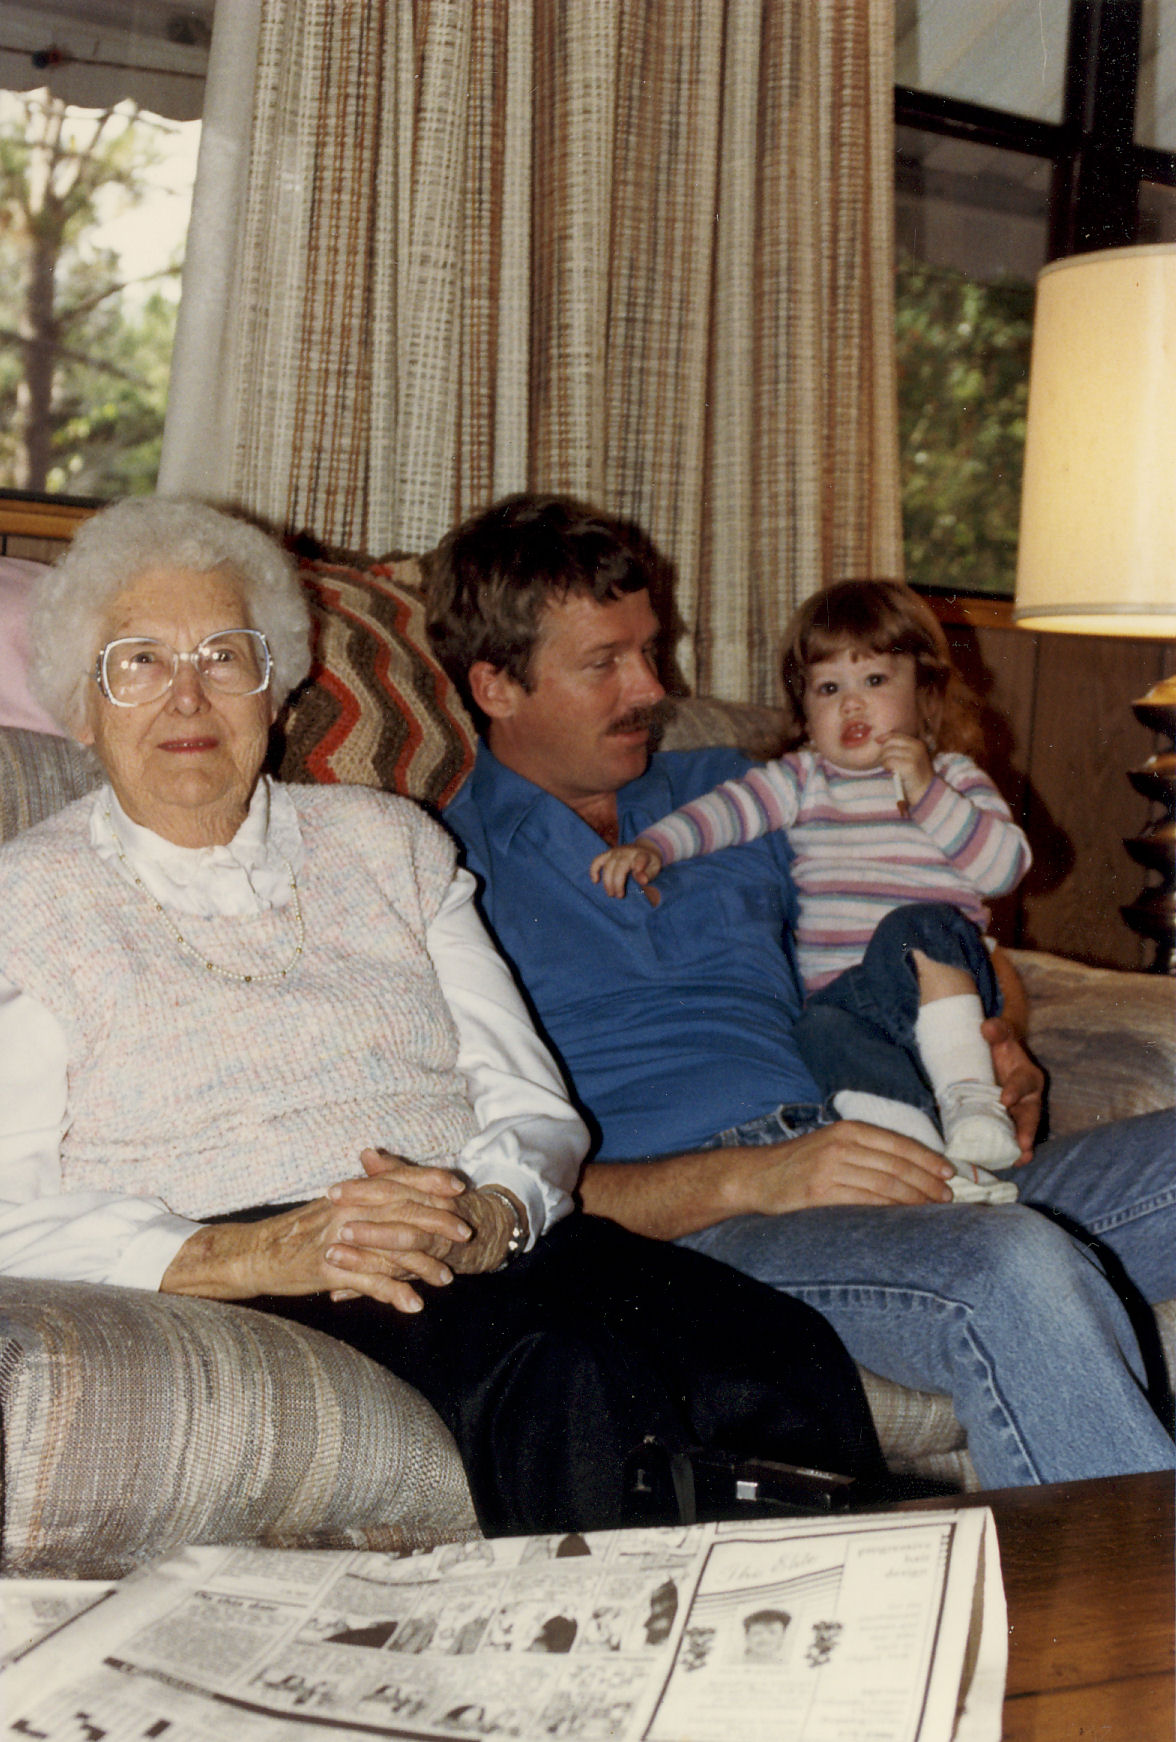 Grandma Mixson, David and Coral